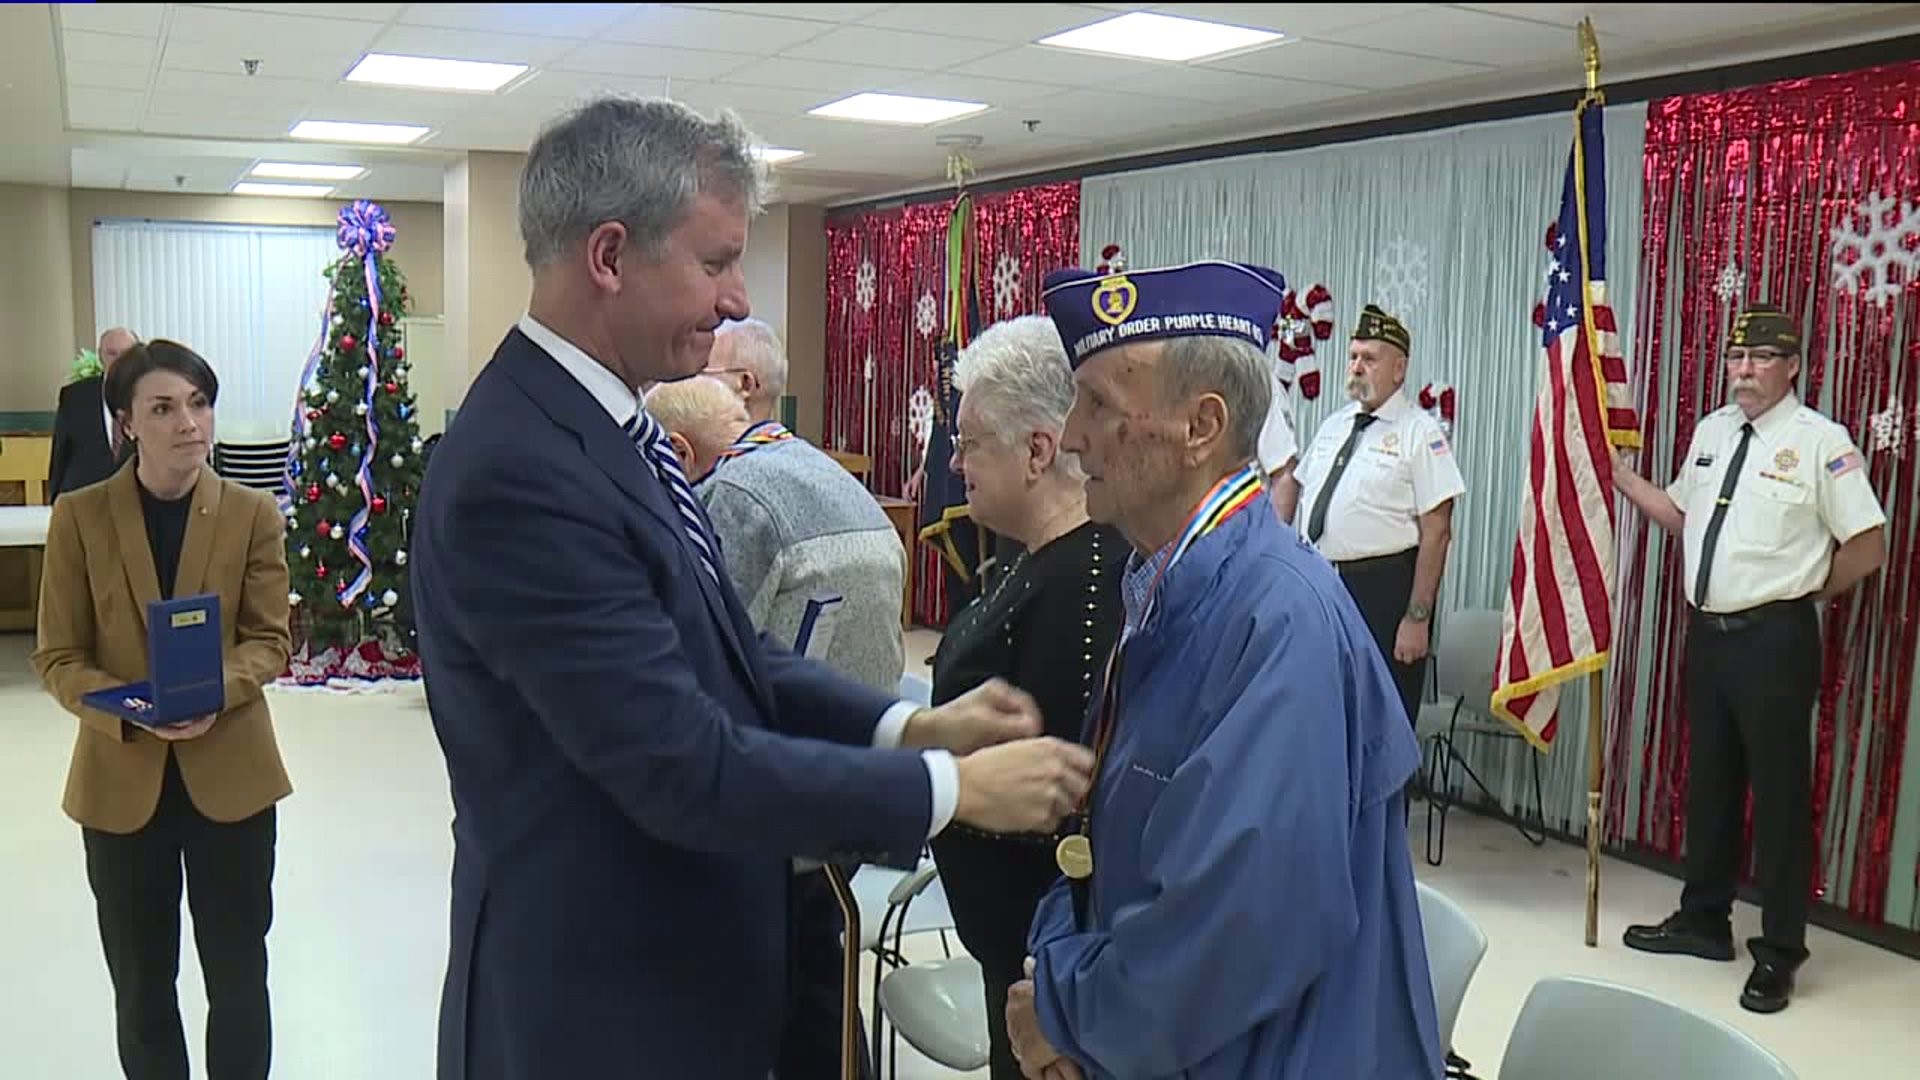 Veterans Receive Medals at Ceremony in Scranton